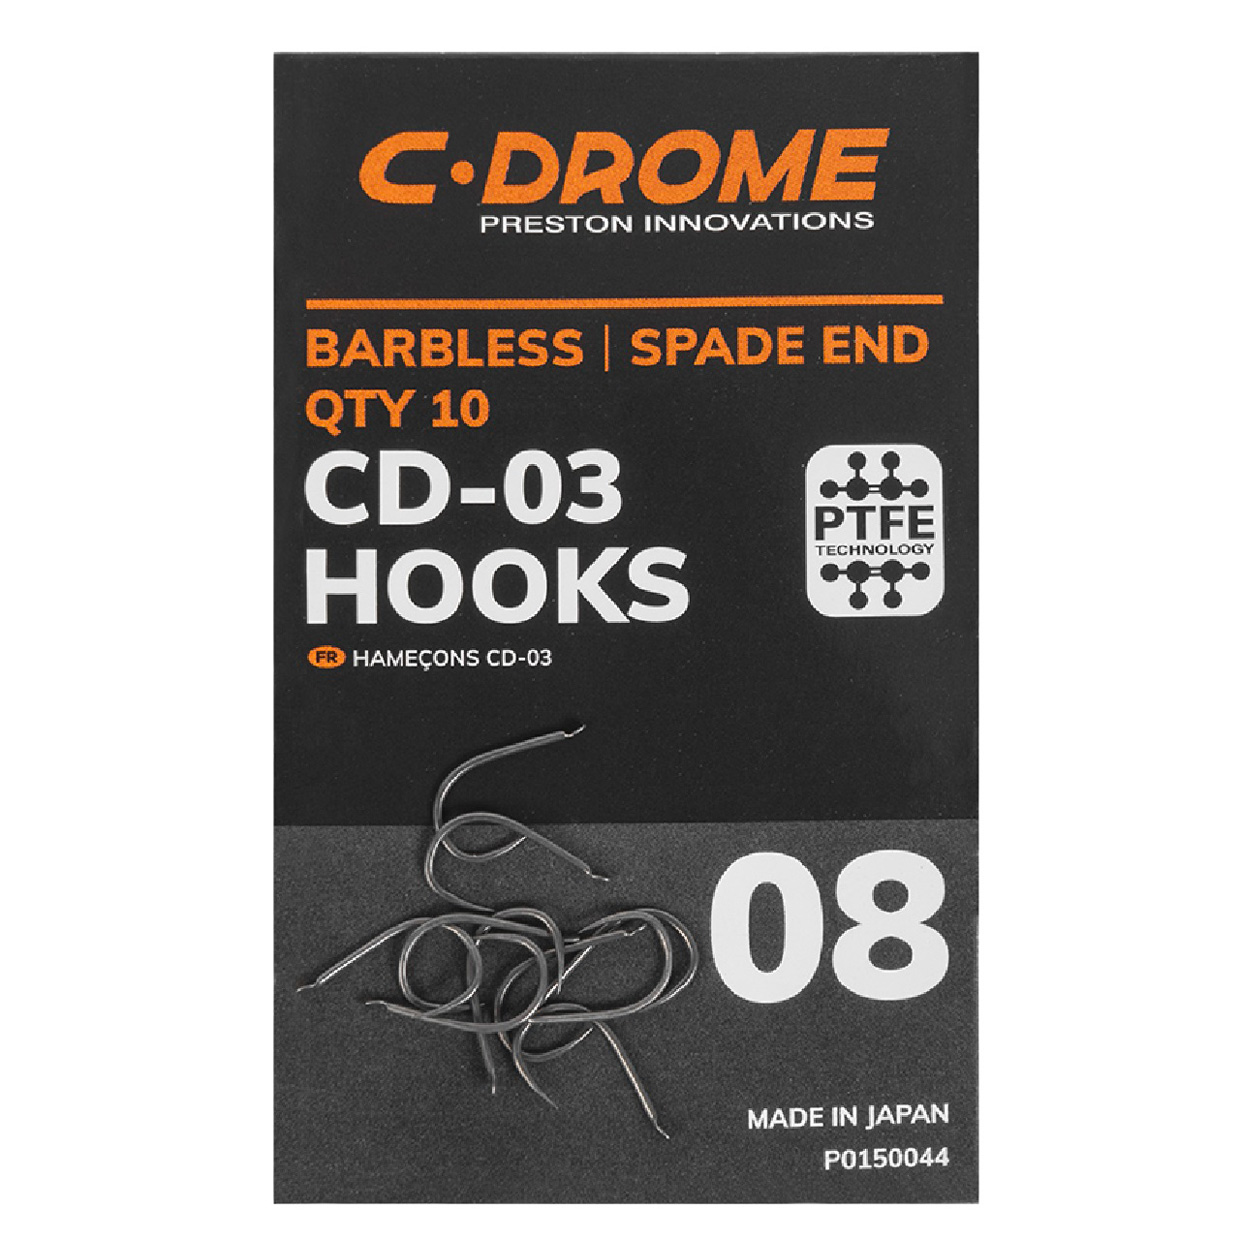 preston C-DROME CD-03 P0150044.jpg